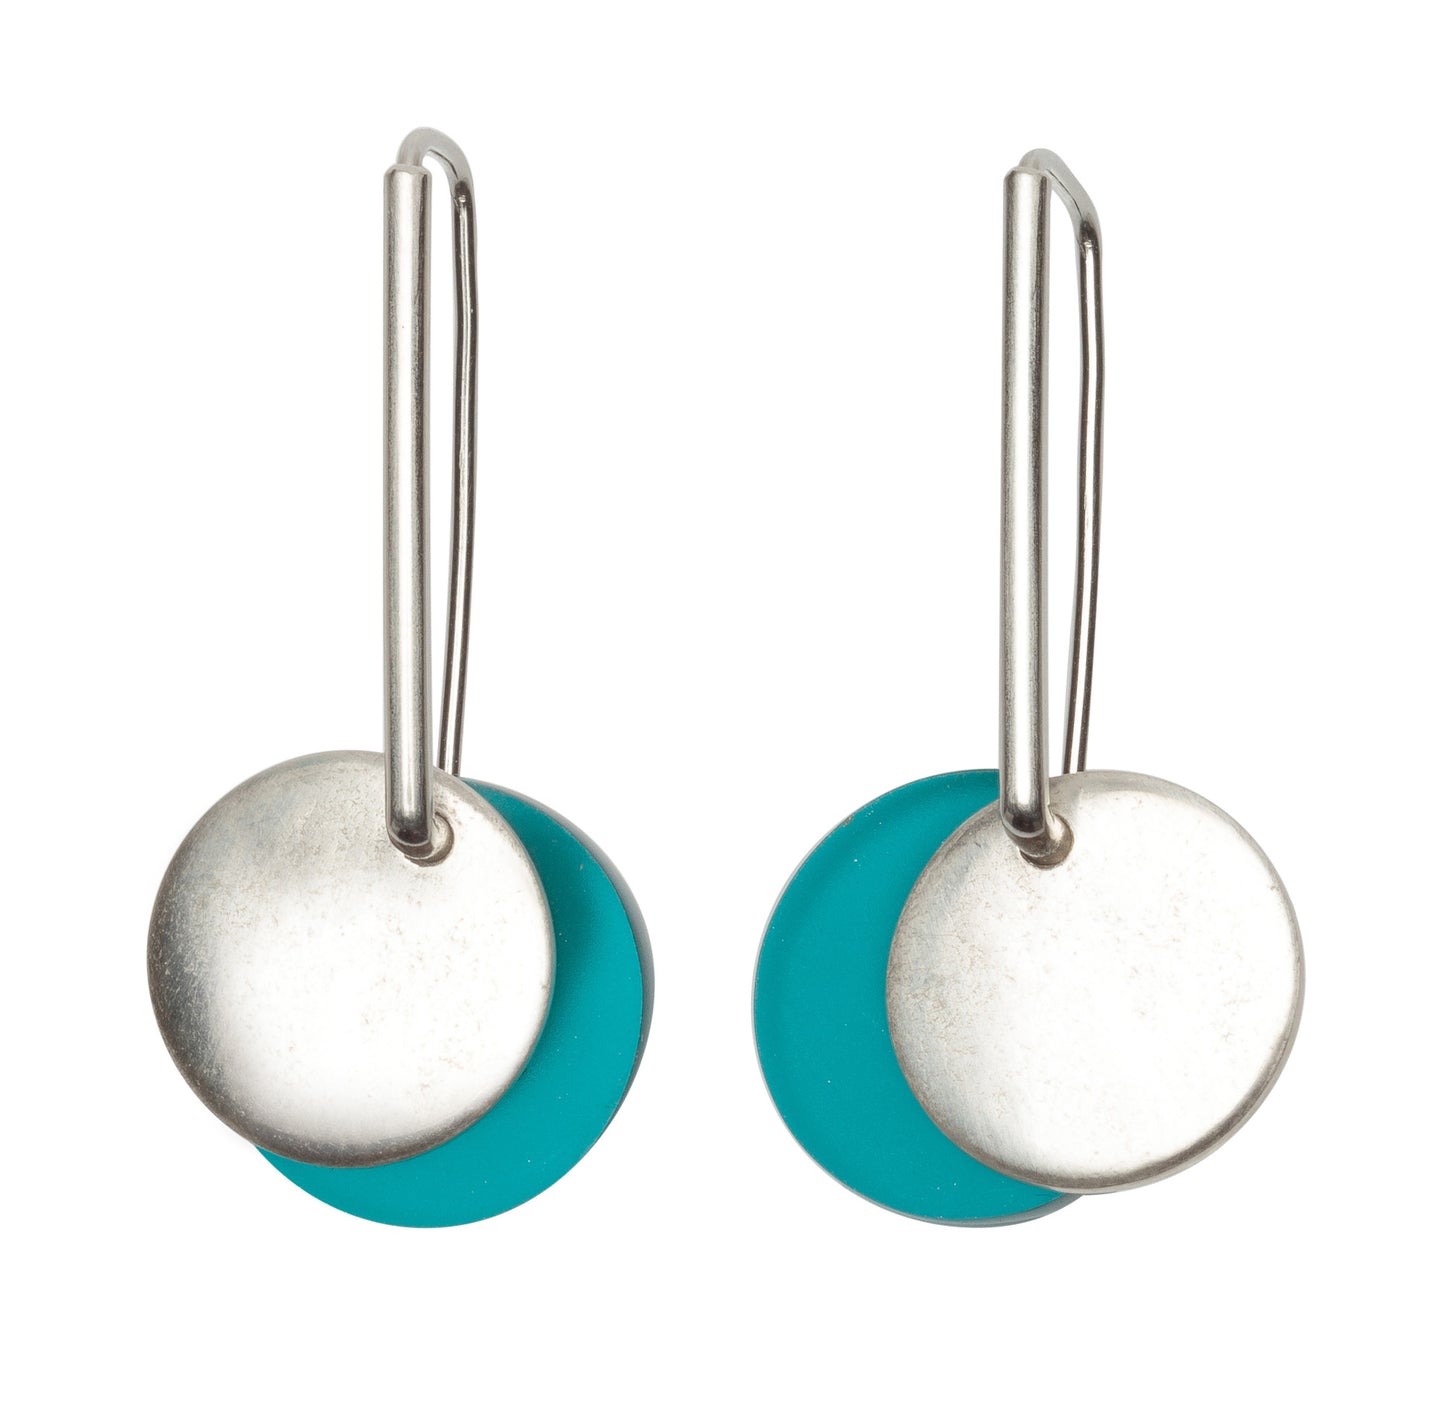 Silver and azure perspex earrings www.barbaraspence.co.uk